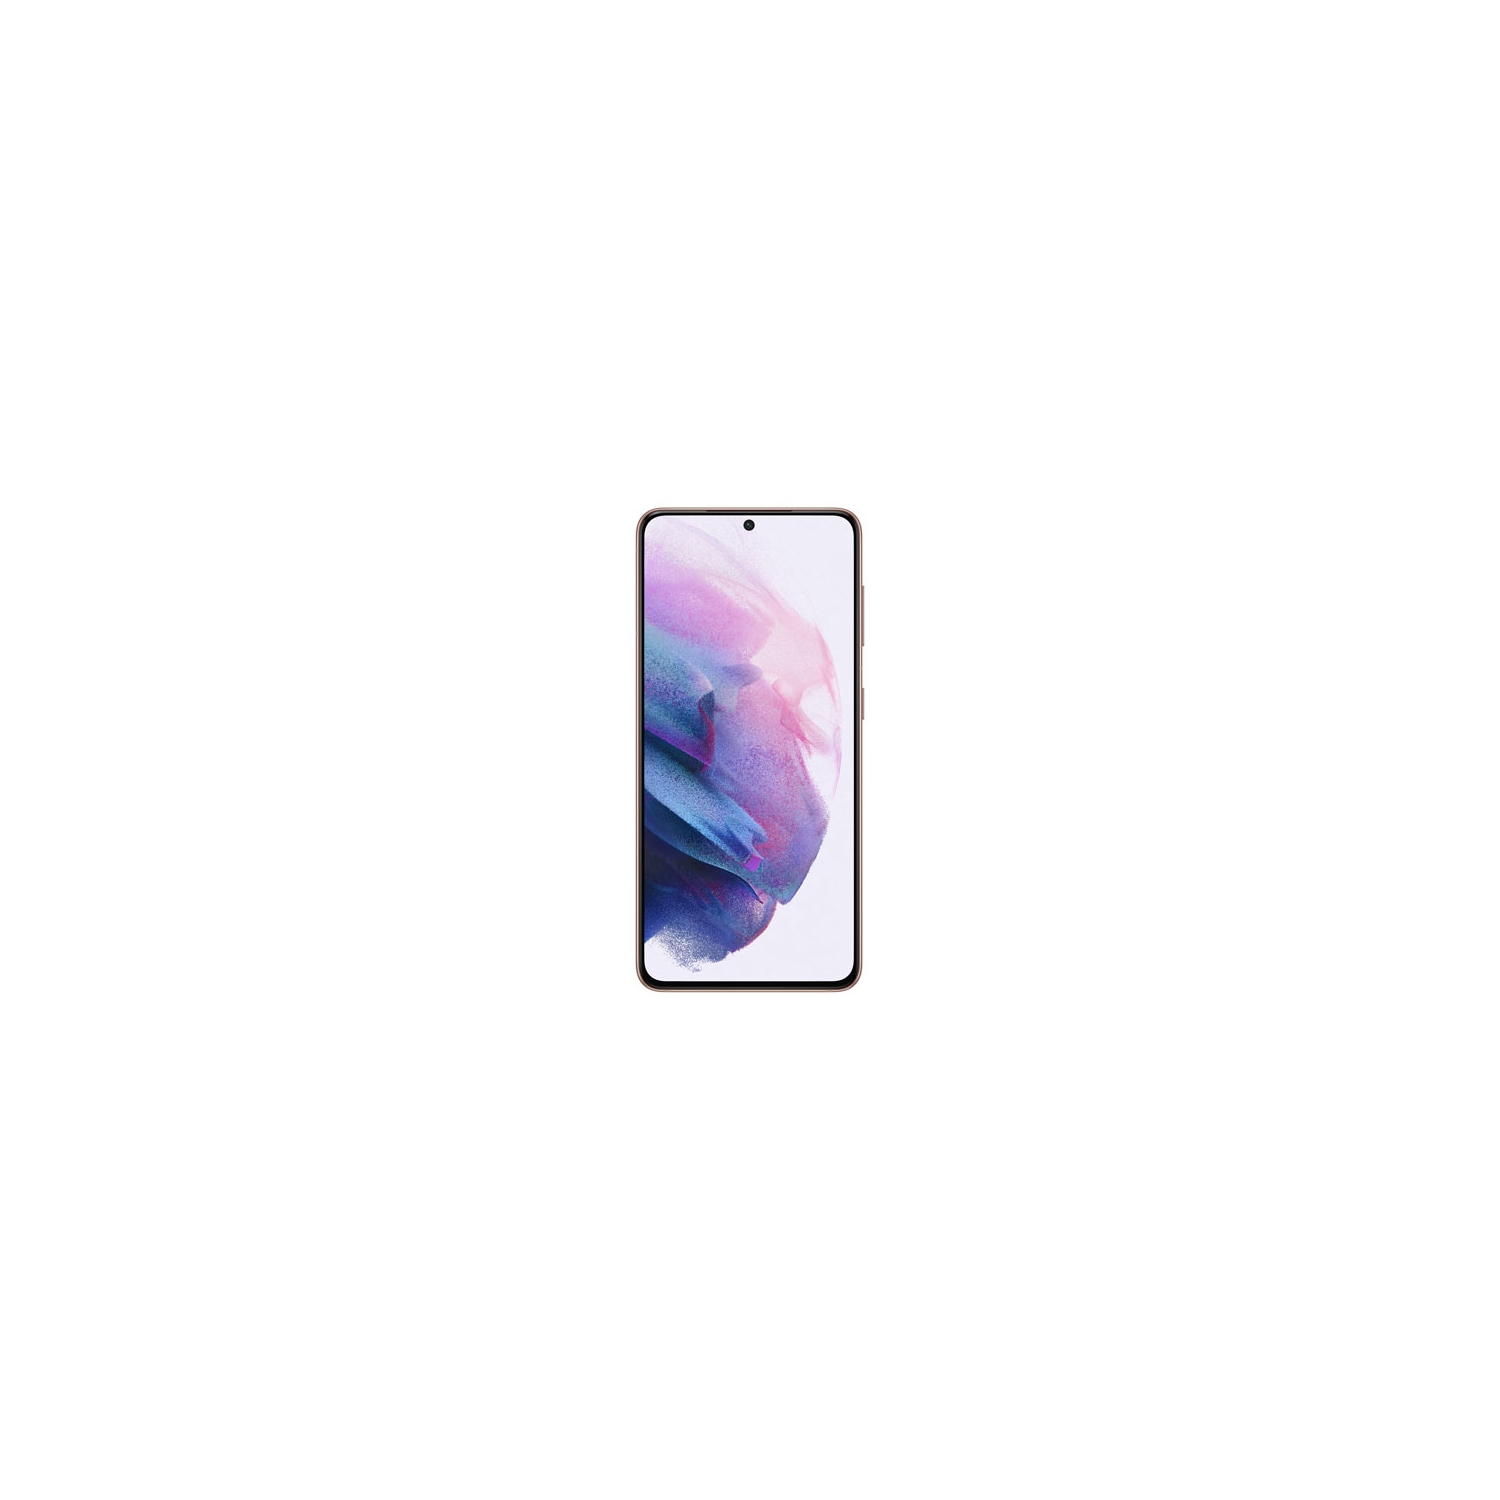 Refurbished (Good) - Samsung Galaxy S21 5G 128GB - Phantom Violet - Unlocked